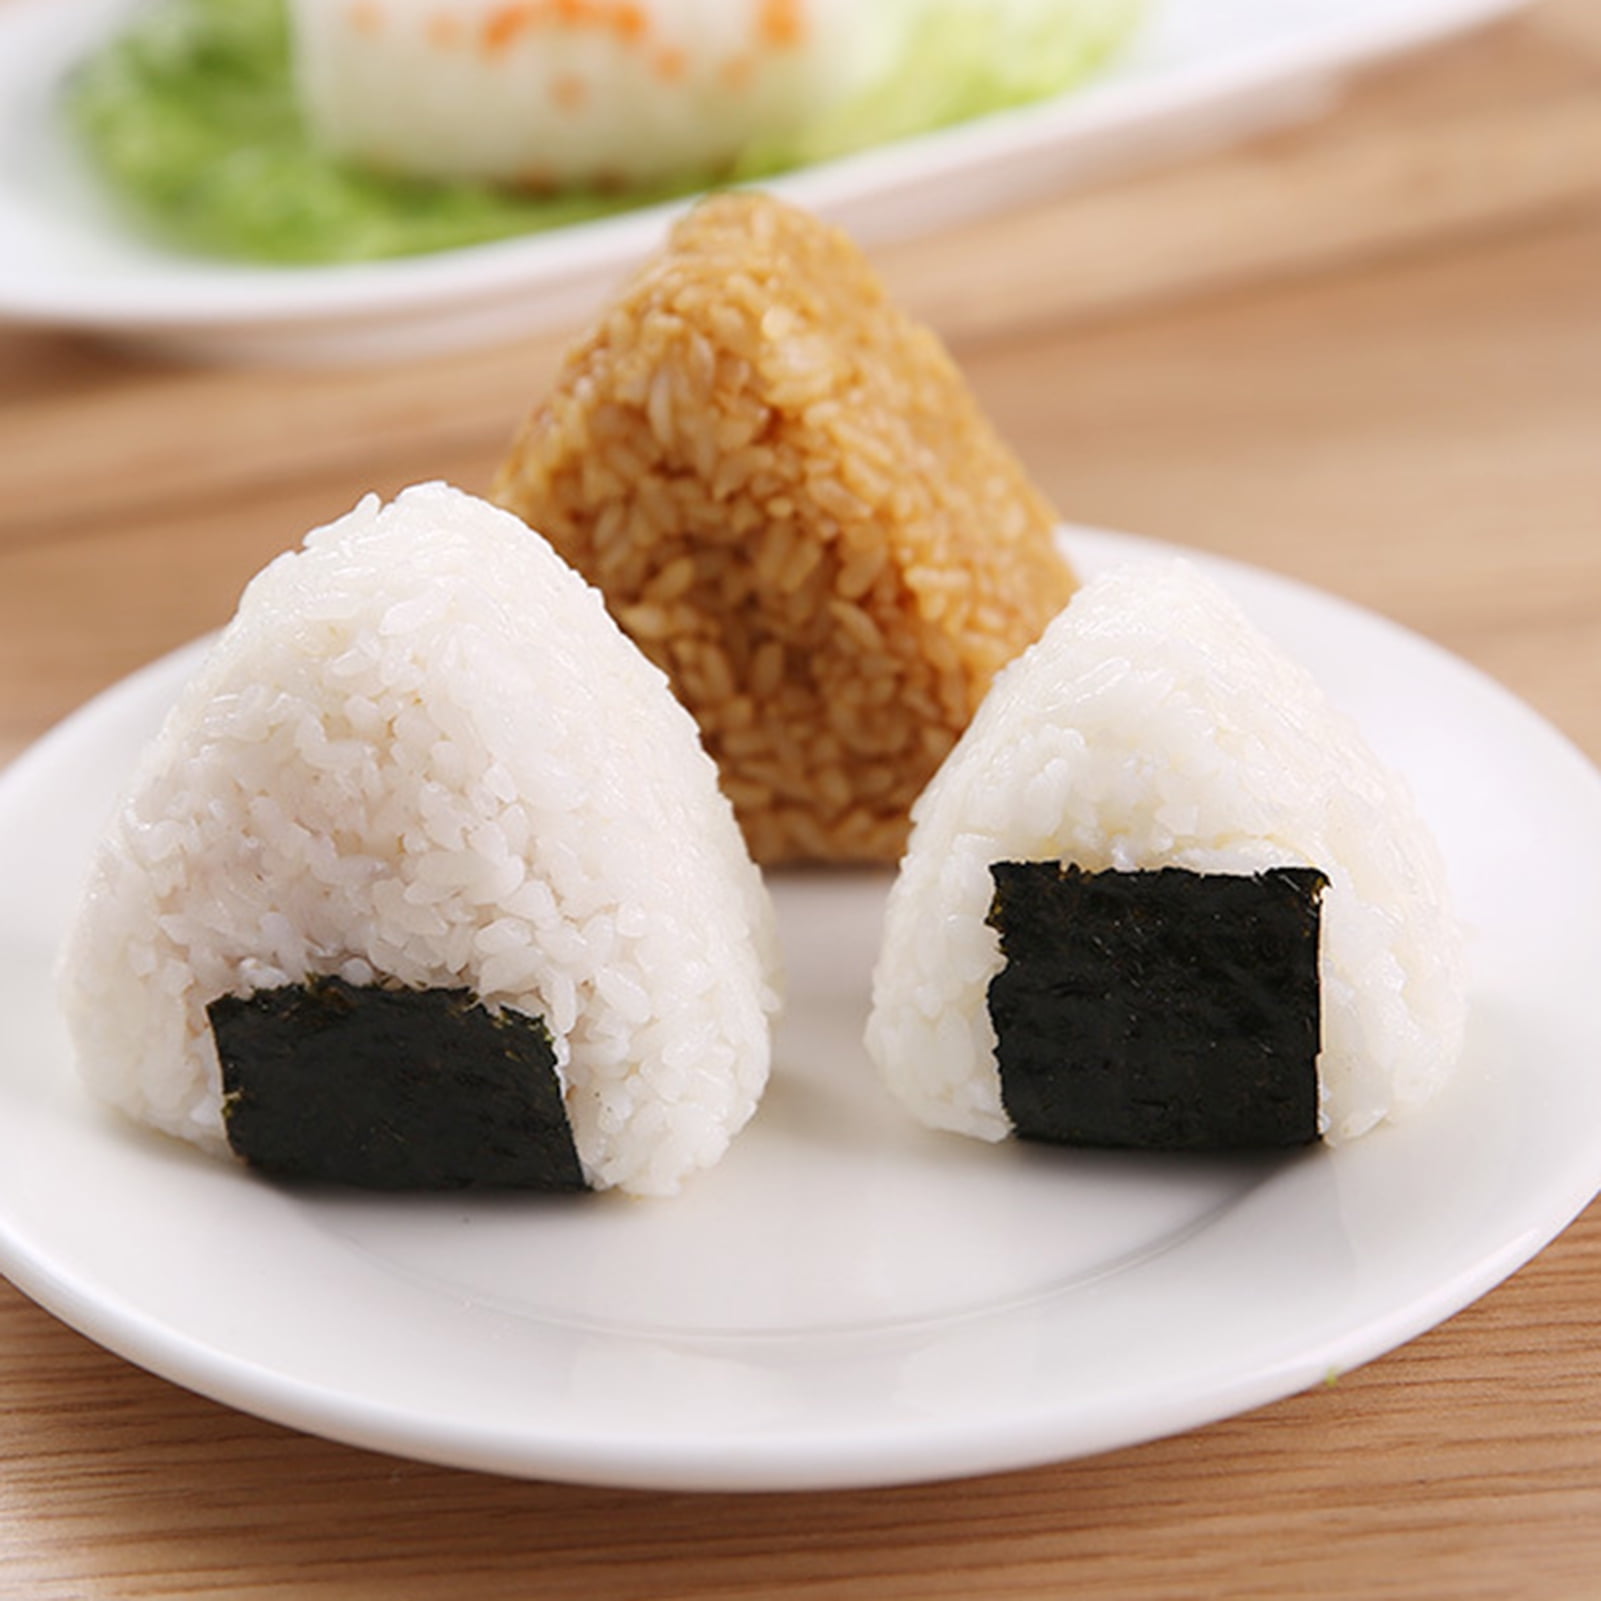 7PCS Triangle PP Sushi Mold Set Various Shapes DIY Onigiri Rice